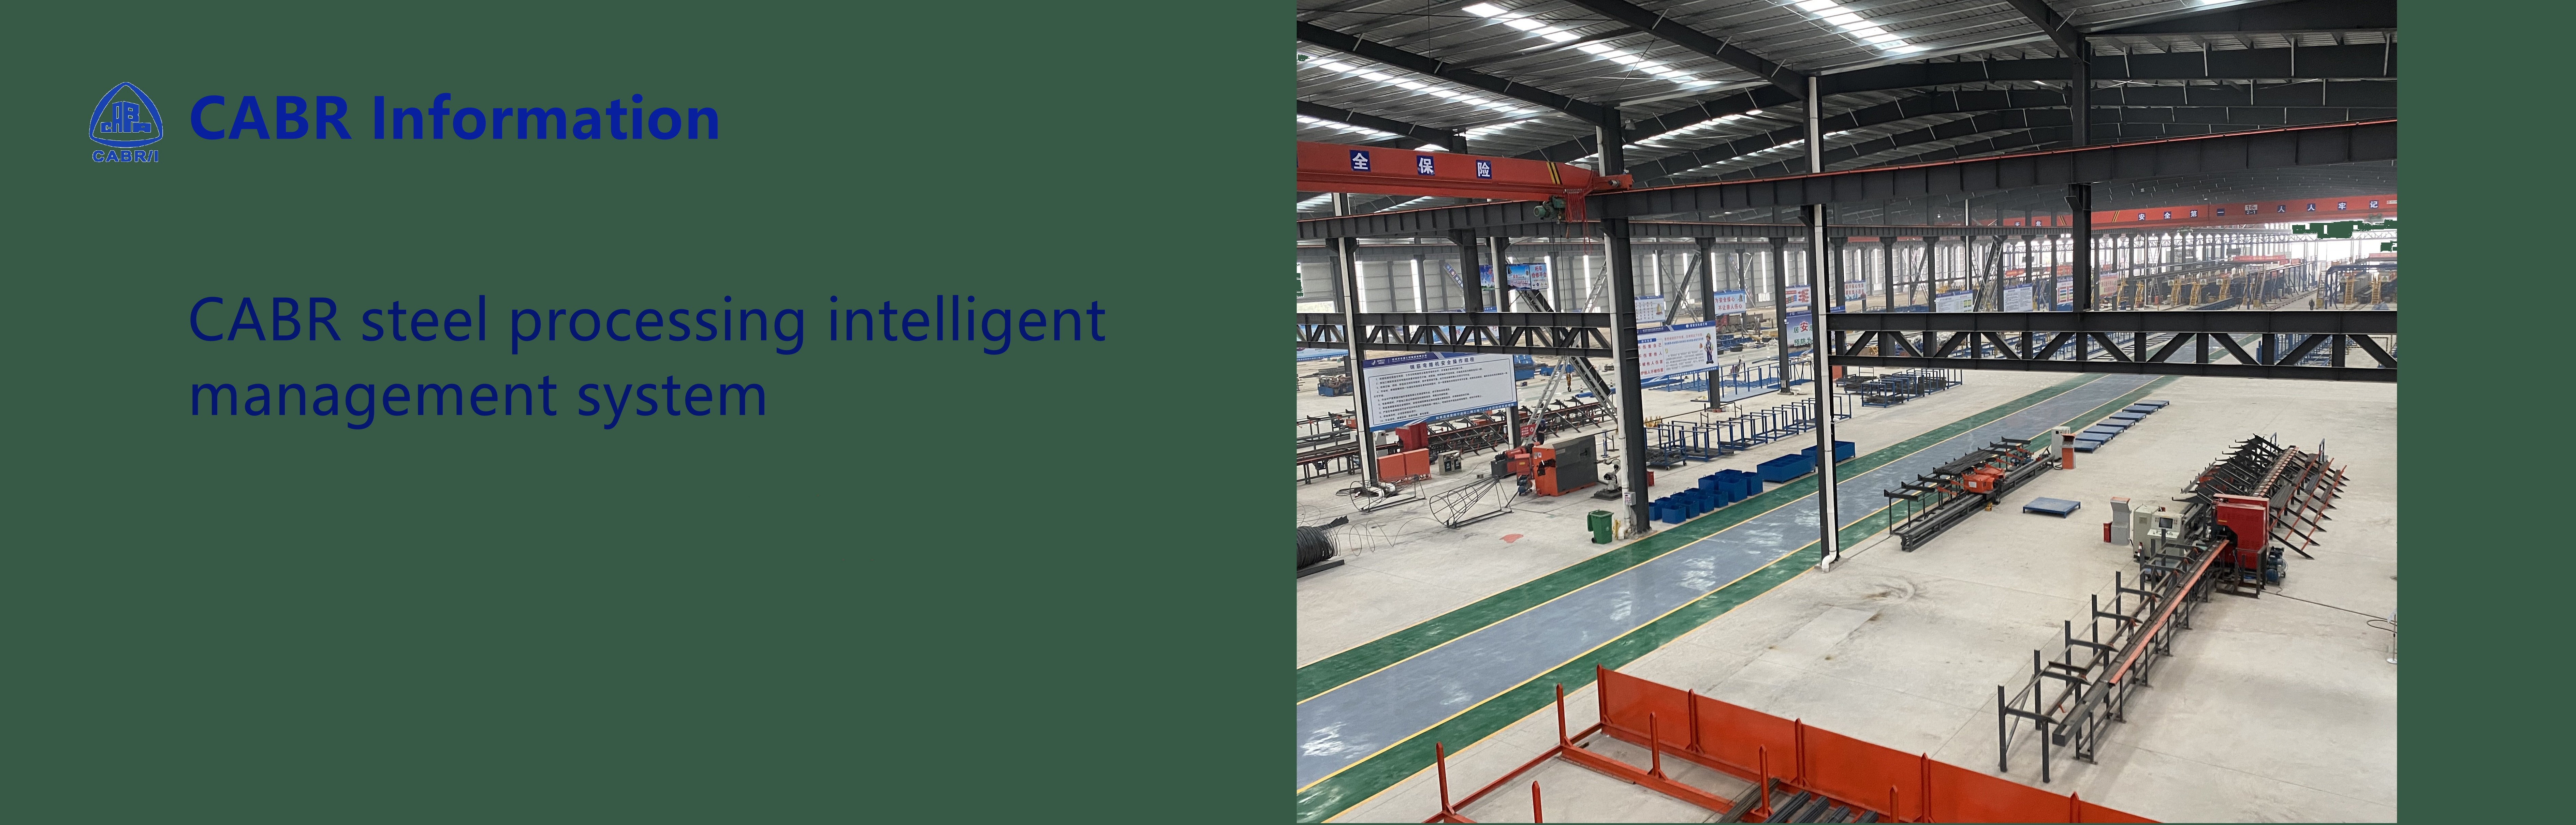 CABR steel processing intelligent management system